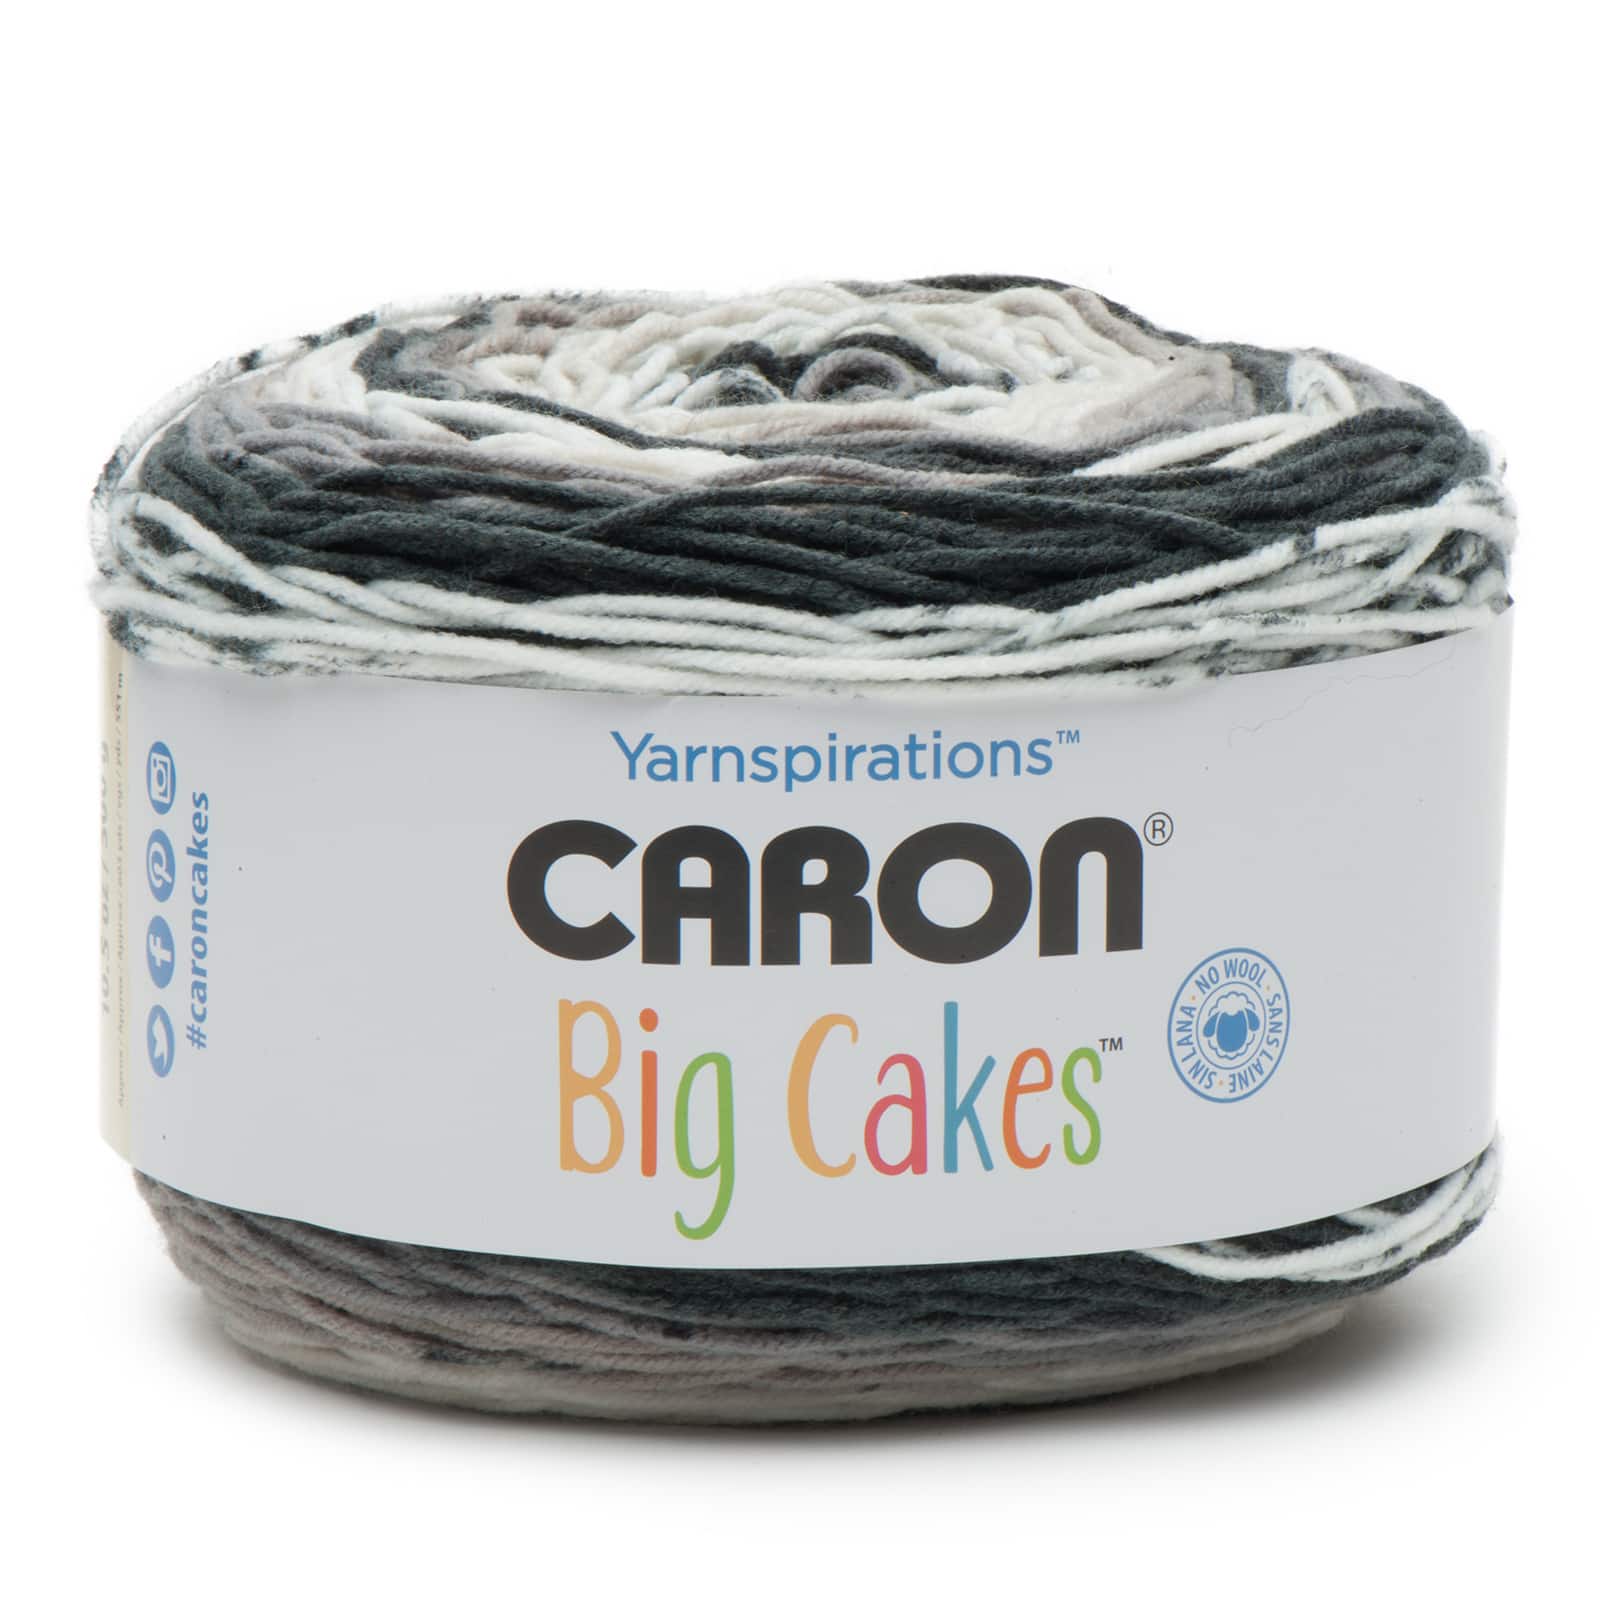 NIGHTBERRY YARN Caron Big Cakes, 10.5 Oz/300 G, 603 Yards/551 M New No  Label 